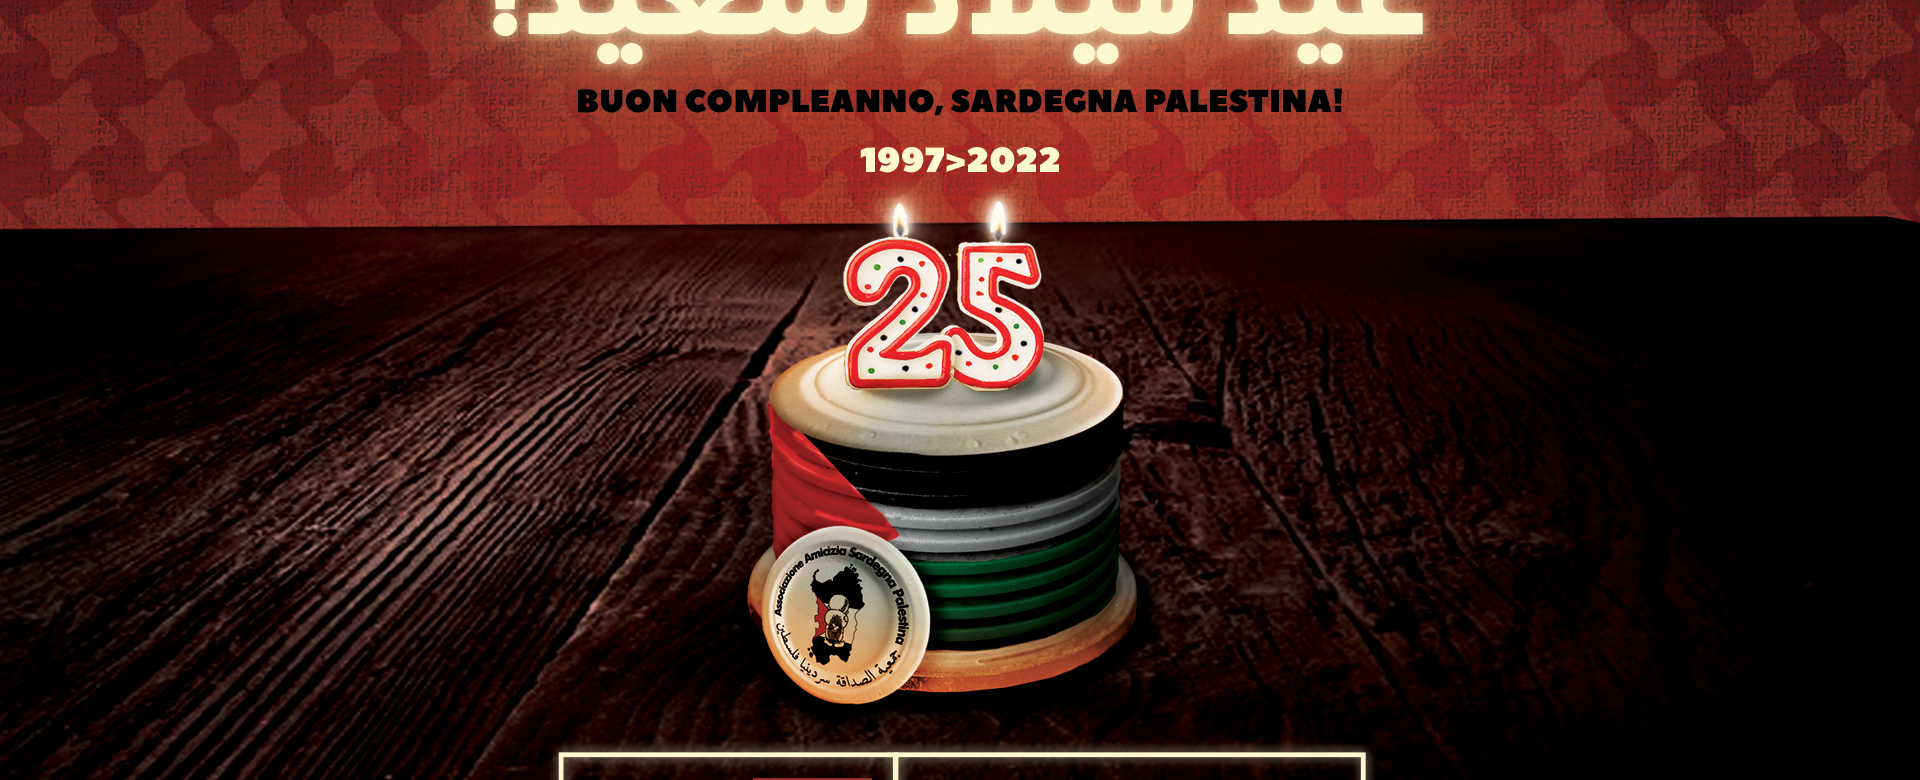 25° anniversario sardegna palestina